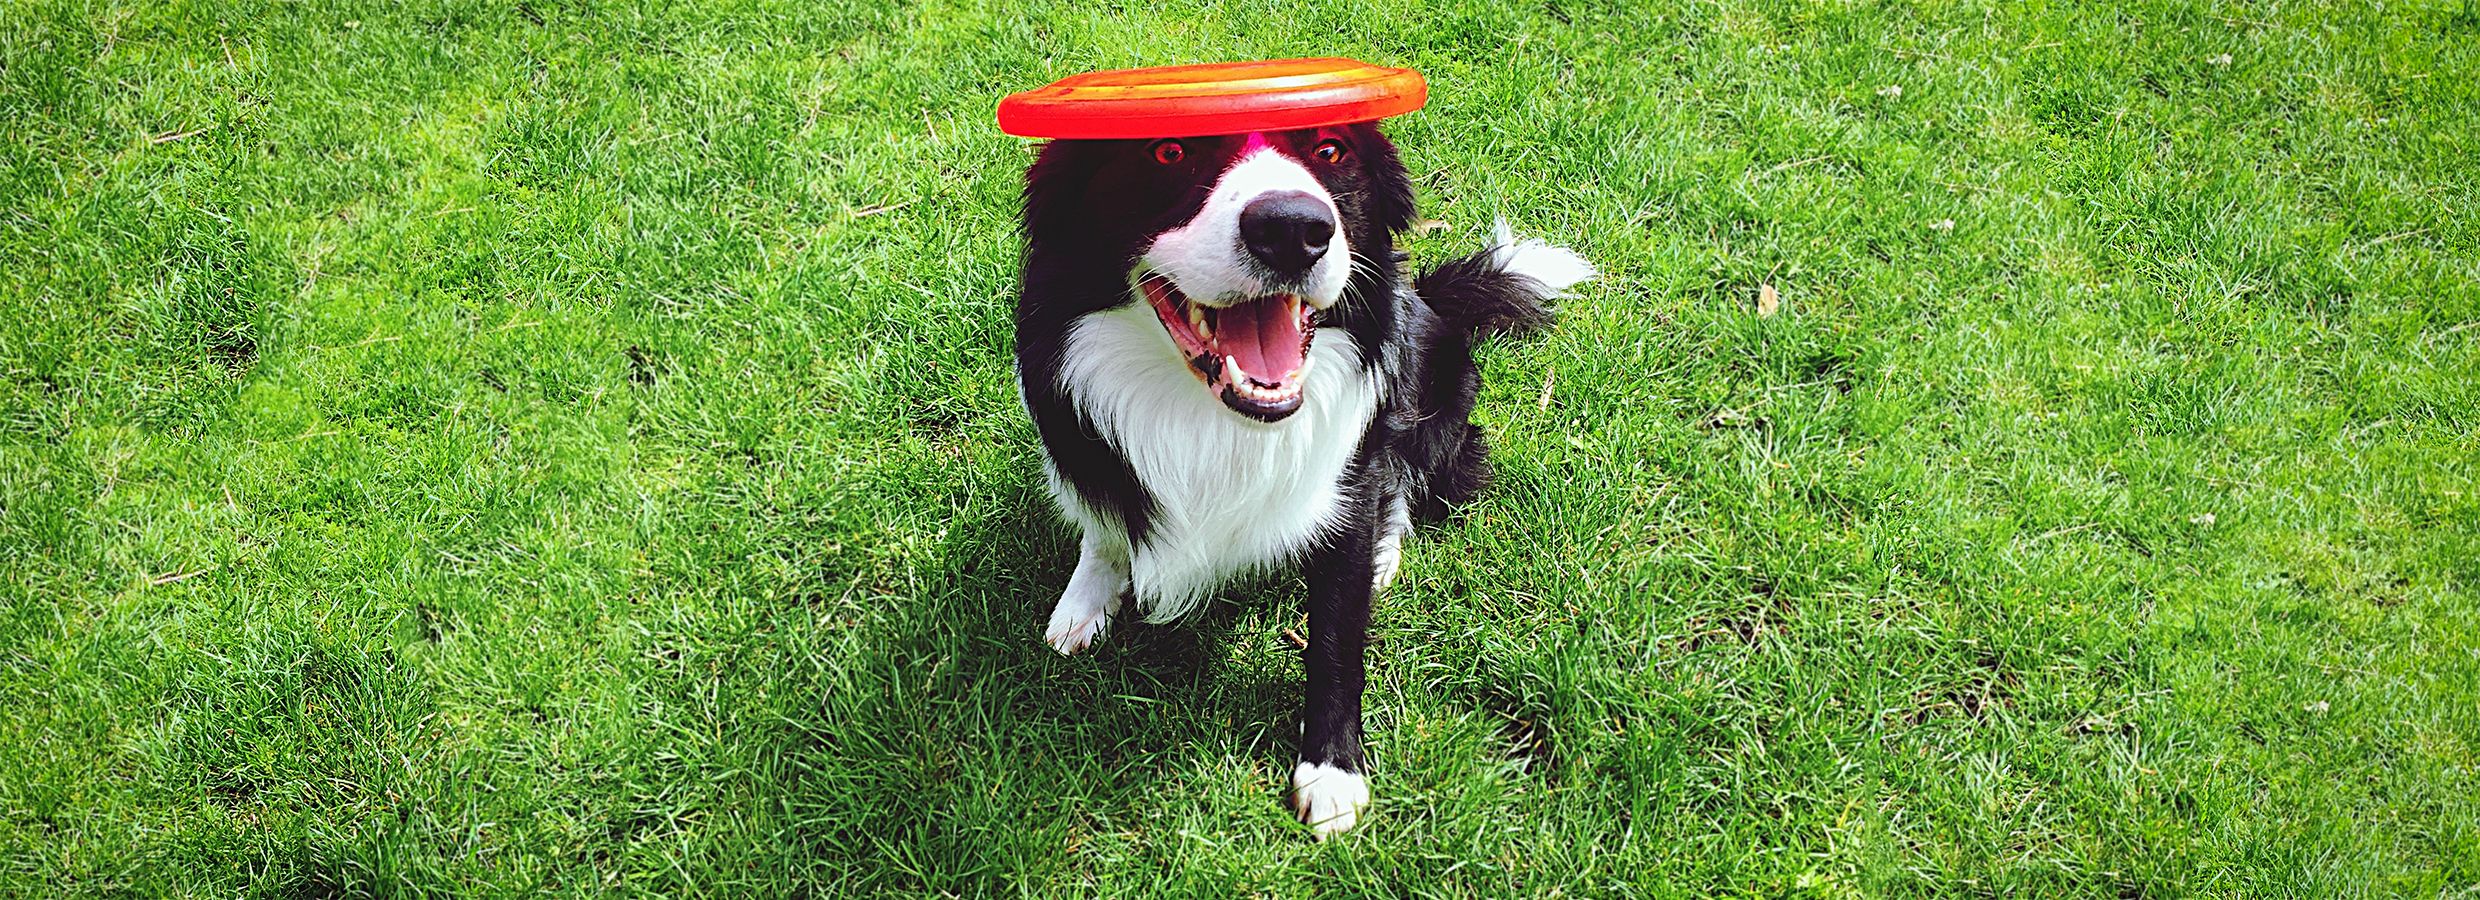 Dog Treat Food Dispensing Slow Feeder Bowls Puzzle Toys - Brilliant Promos  - Be Brilliant!